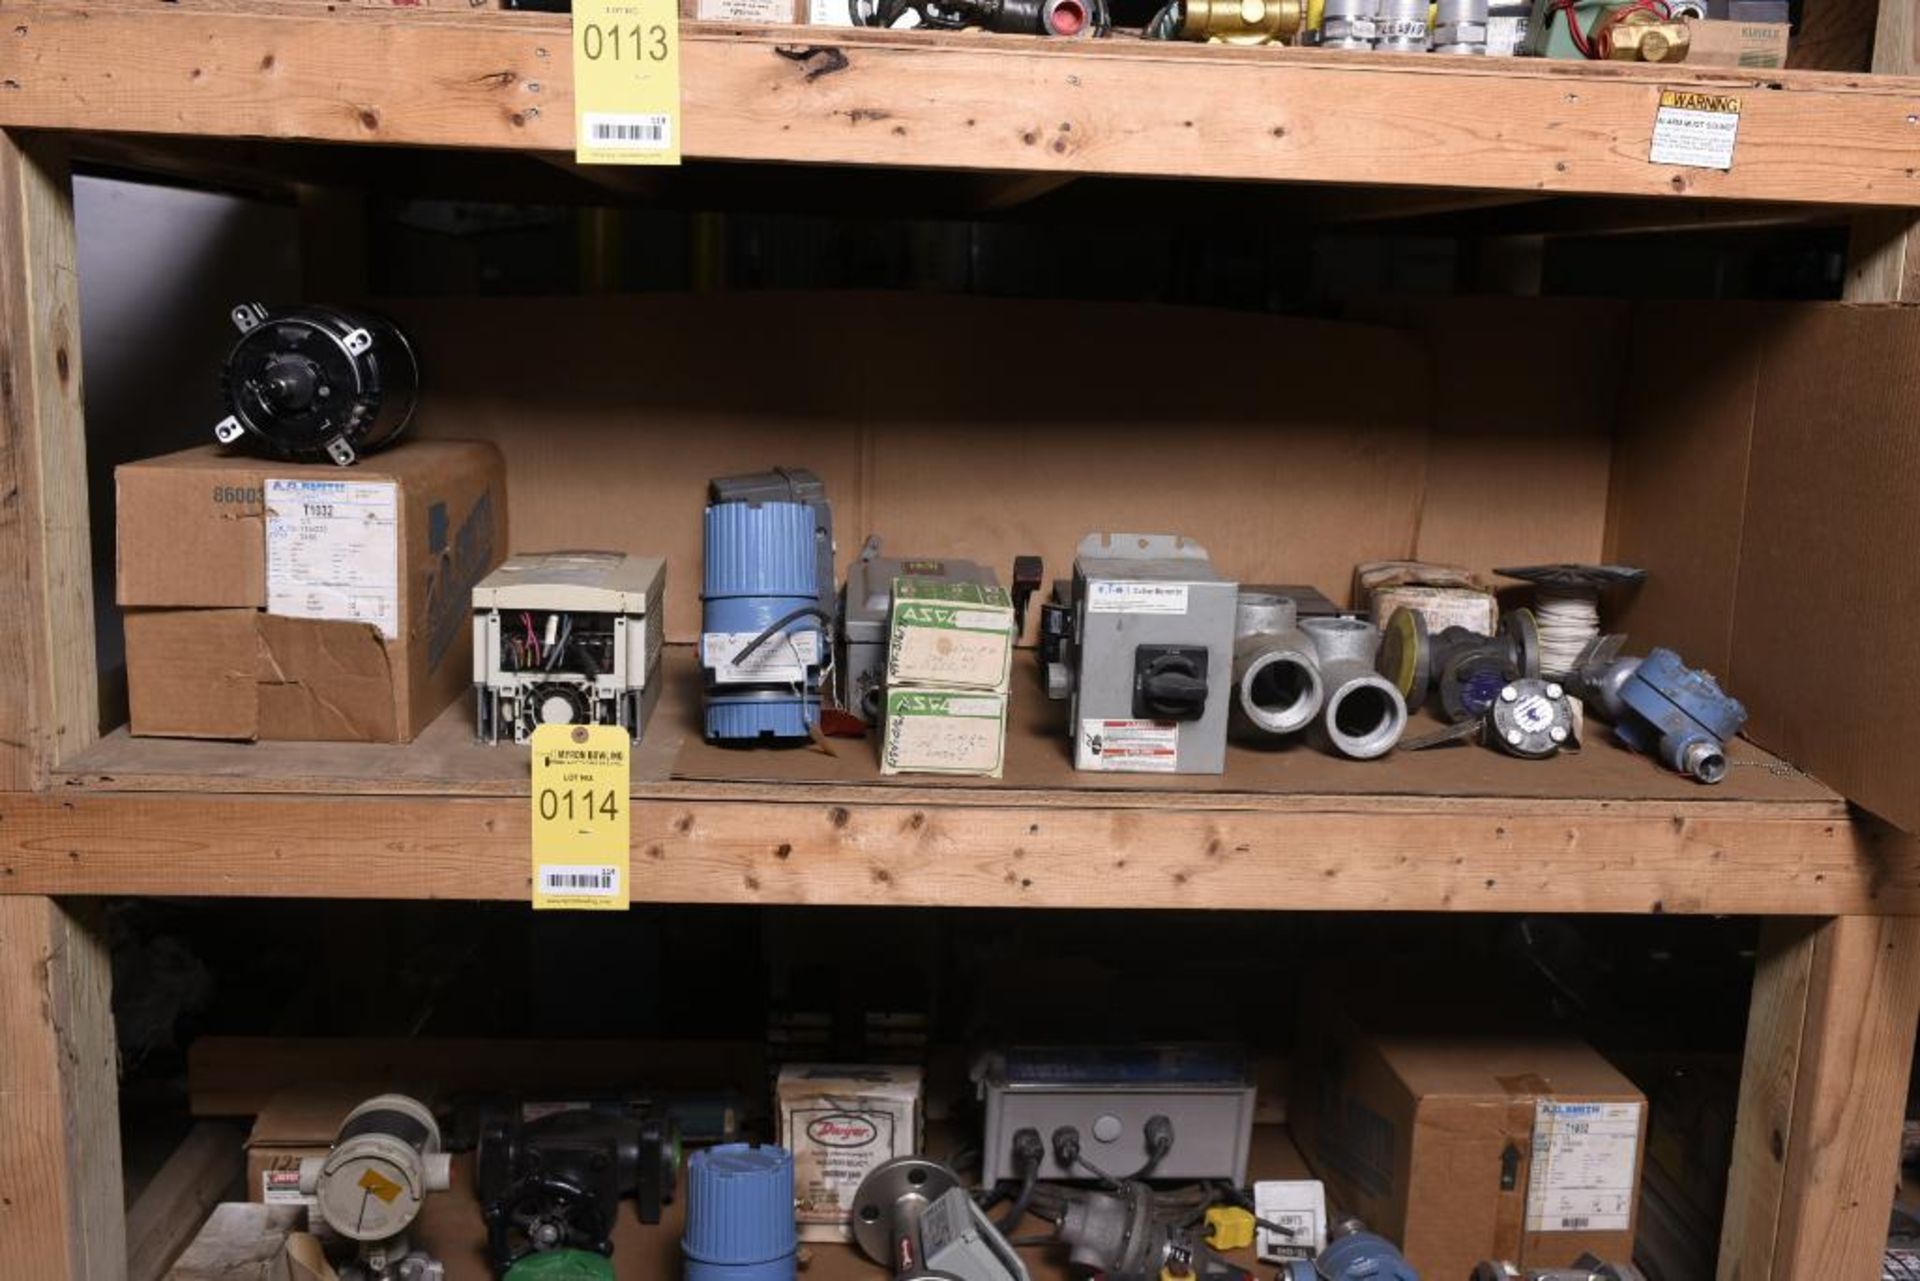 Shelf of Miscellaneous MRO, Valves, Electrical, Motors, Indicators, Pumps (Rosemount, Square D, Kunk